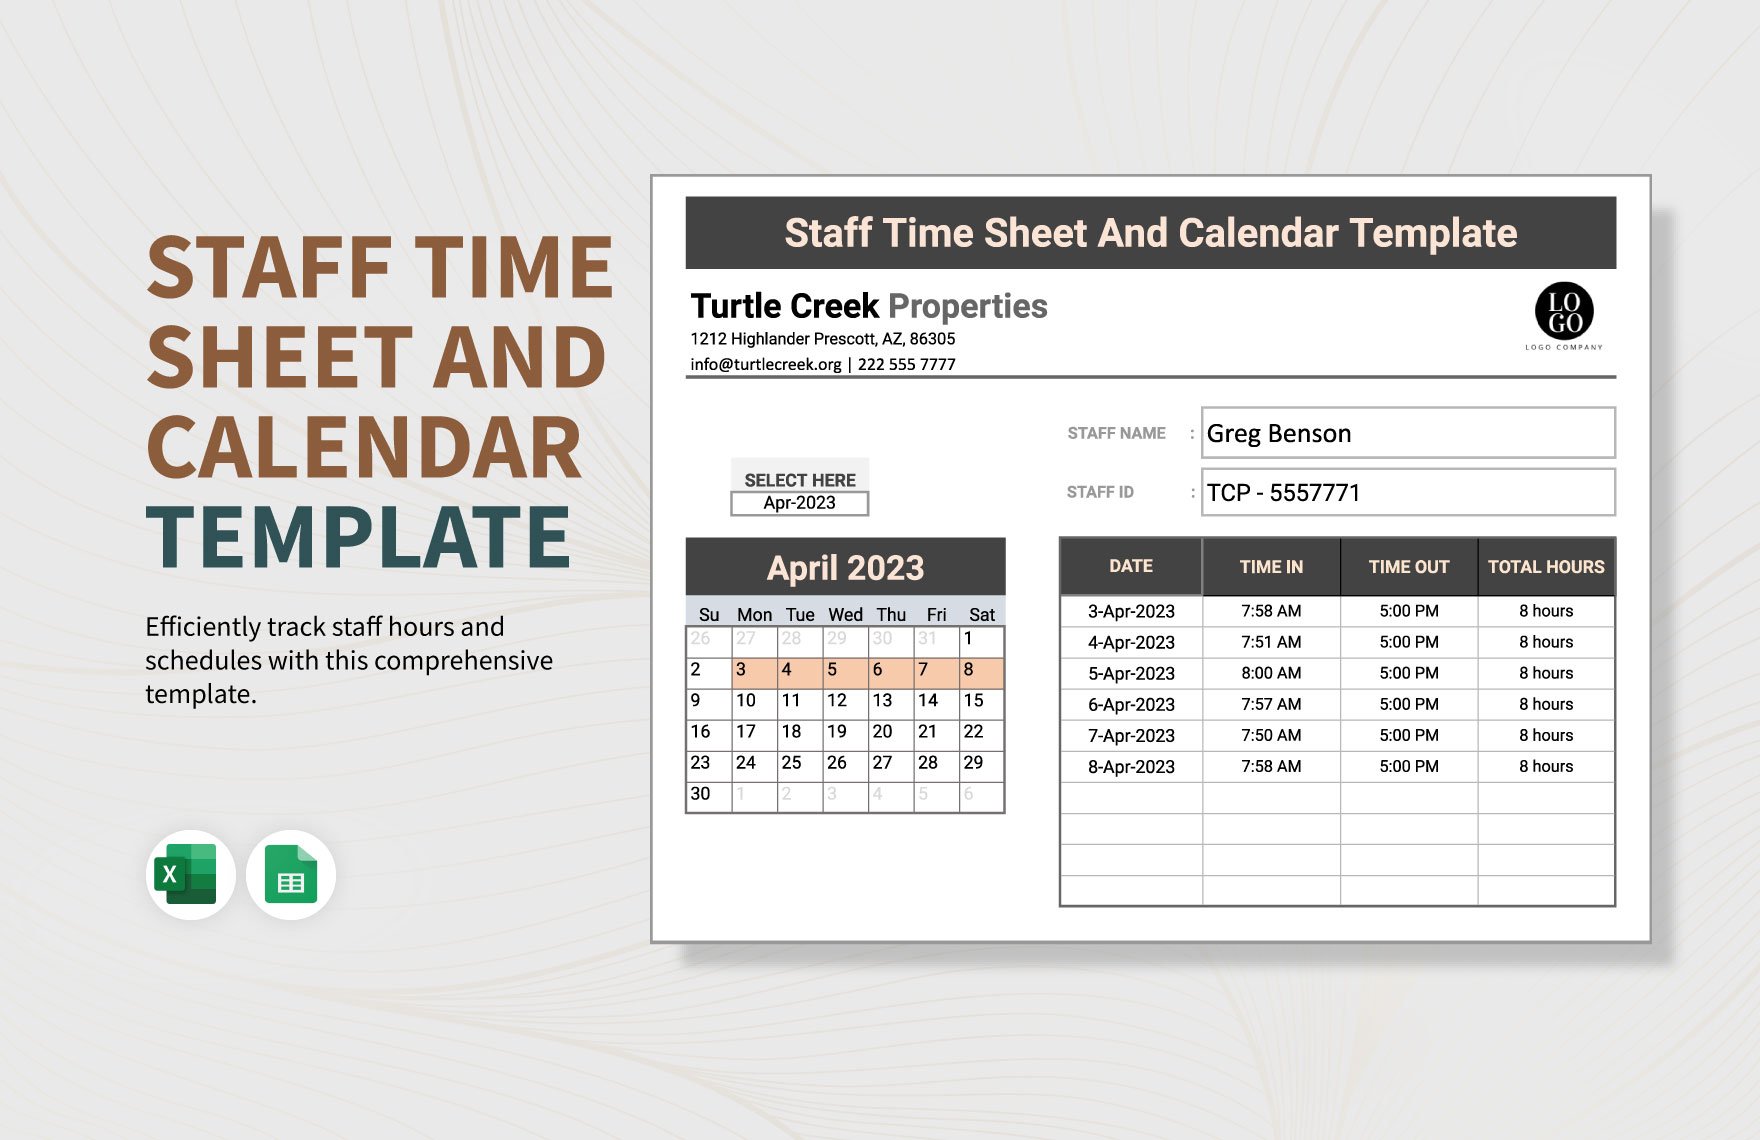 Staff Time Sheet And Calendar Template